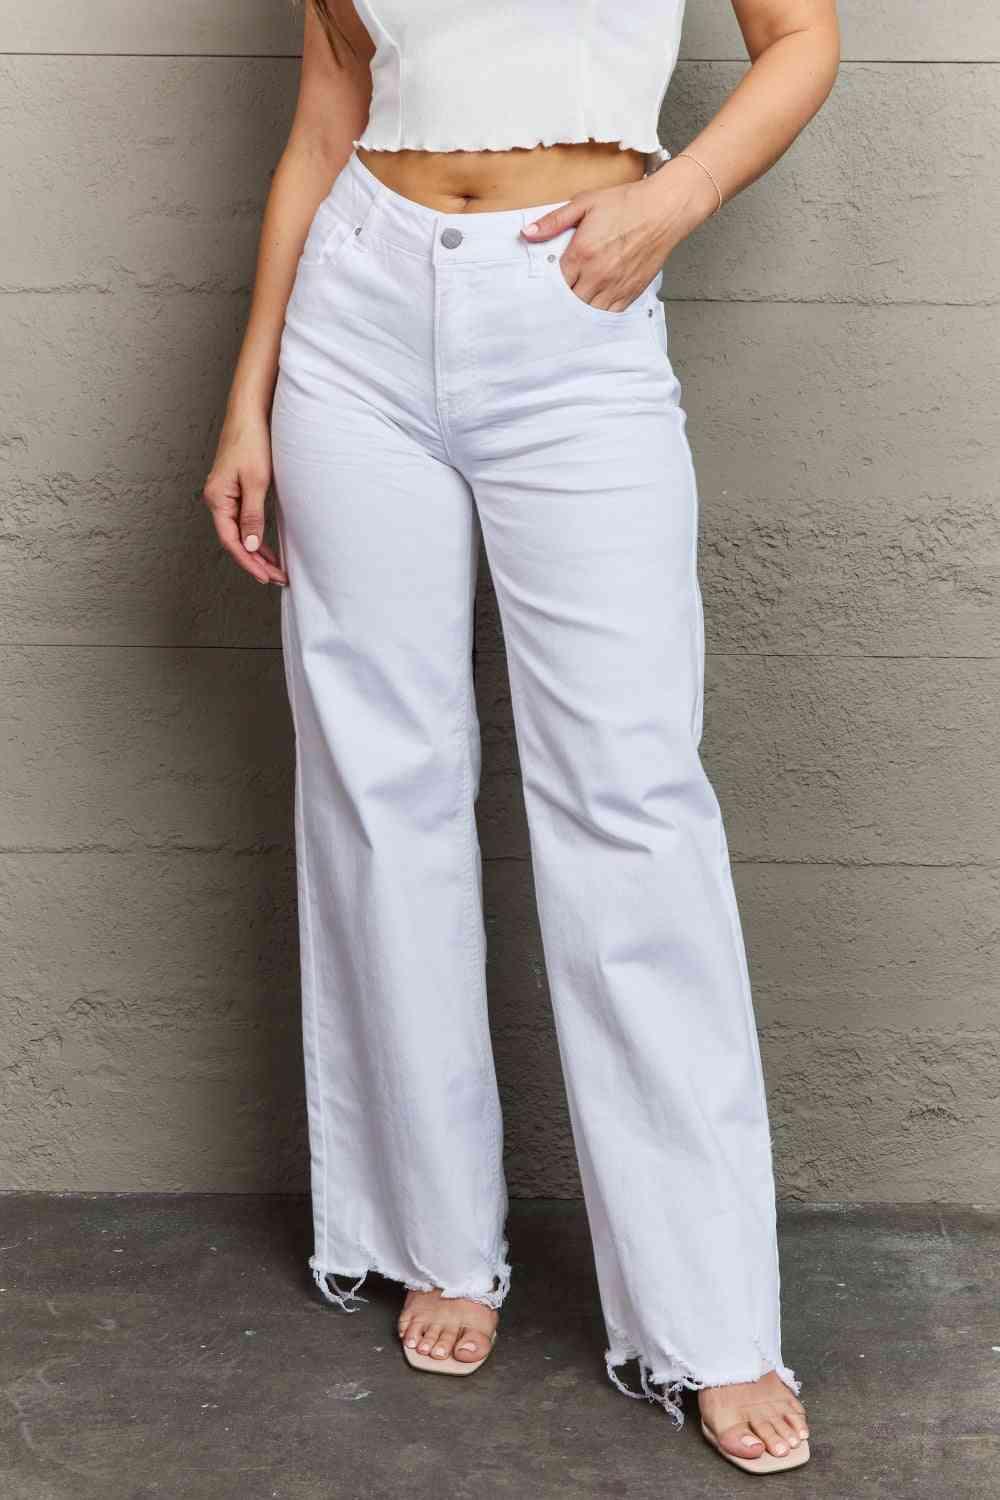 Bona Fide Fashion - Full Size High Waist Wide Leg Jeans in White - Women Fashion - Bona Fide Fashion